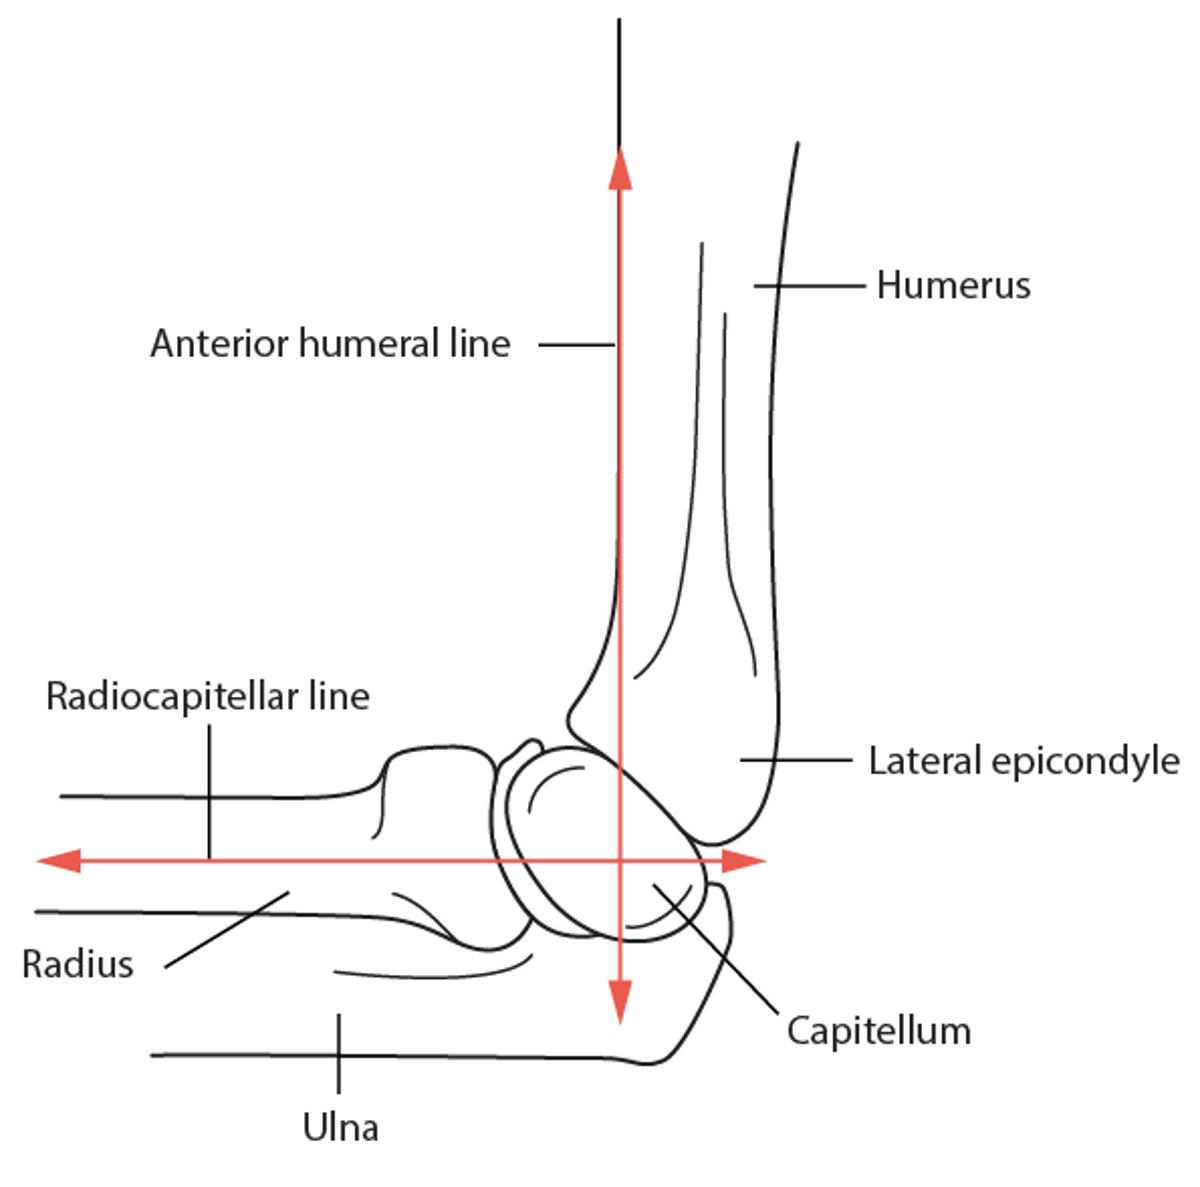 Anterior humeral line and radiocapitellar line